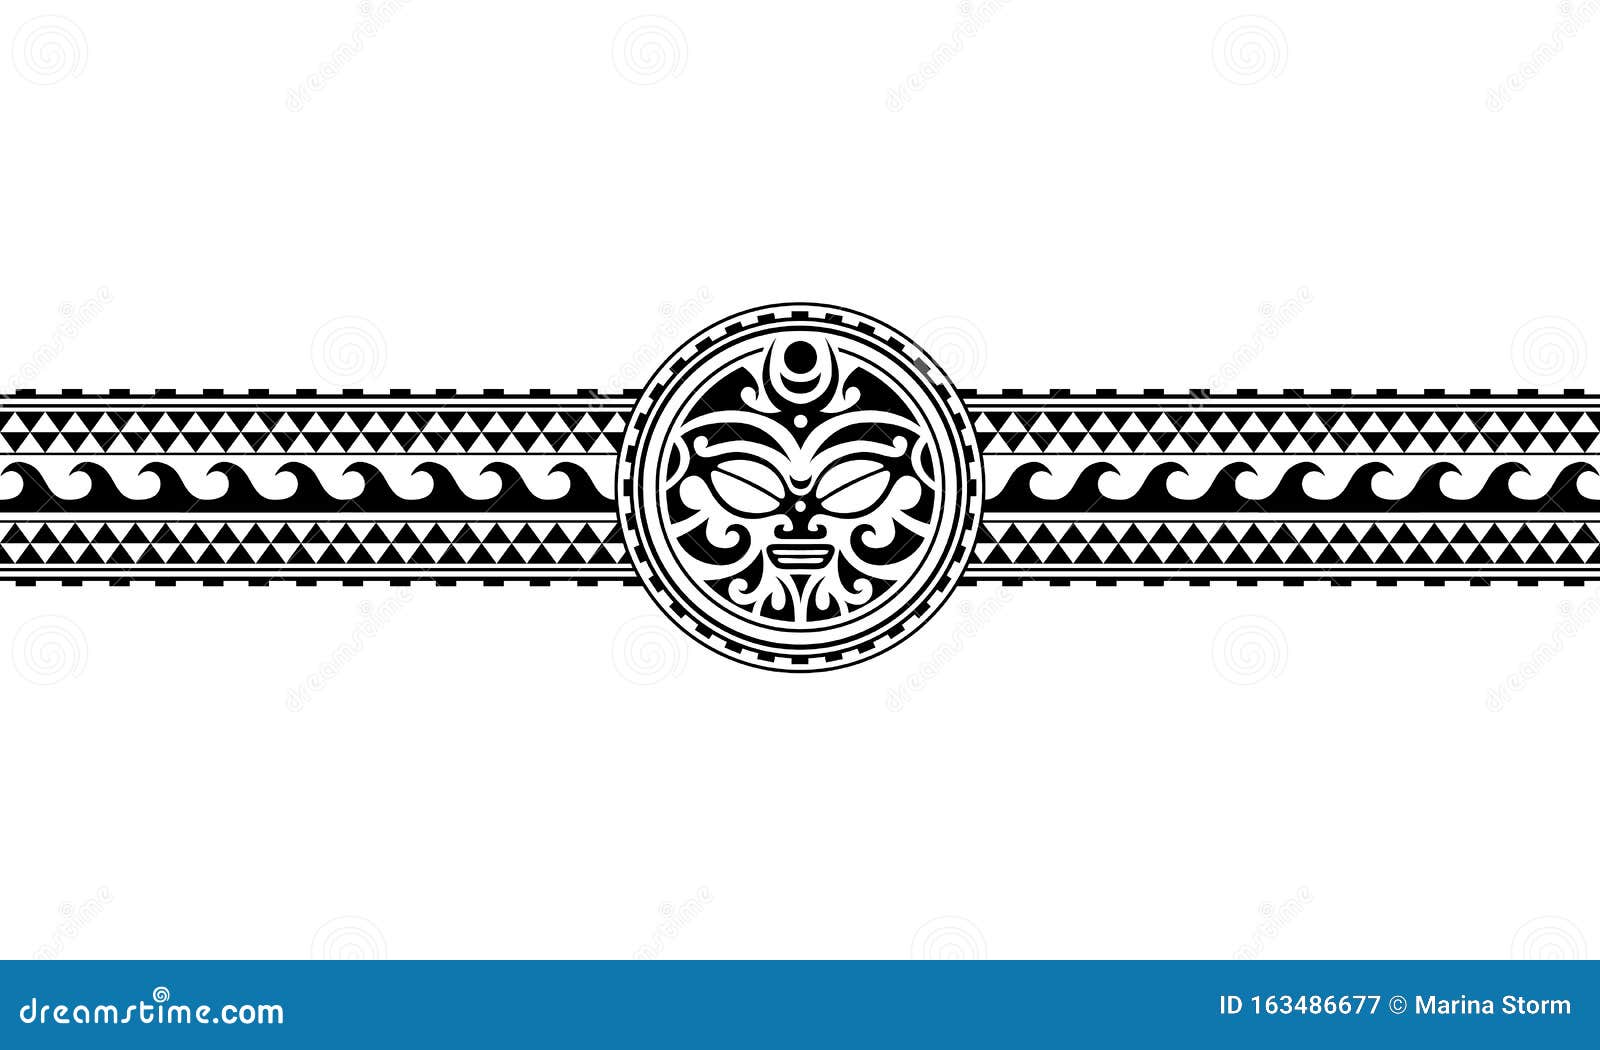 Maori Polynesian Tattoo Border Tribal Sleeve Pattern Vector Samoan Bracelet Tattoo Design Fore Arm Or Foot Stock Vector Illustration Of Isolated Aztec